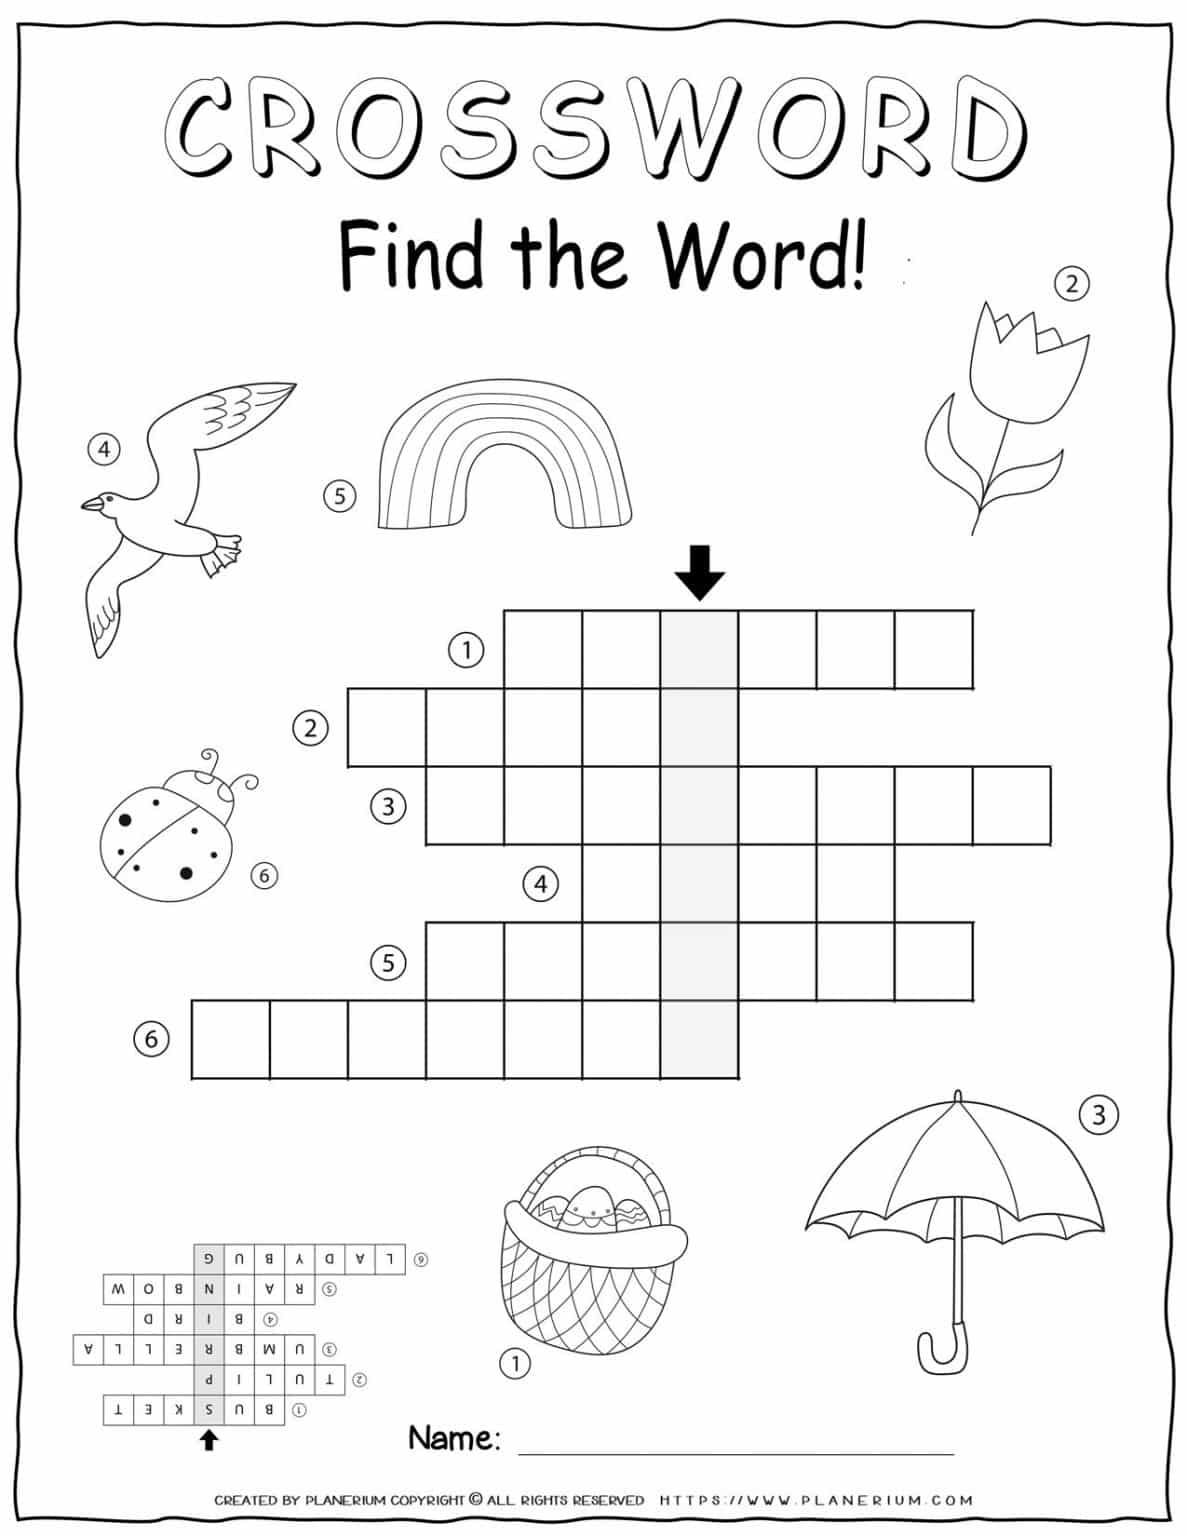 spring-crossword-find-the-word-planerium